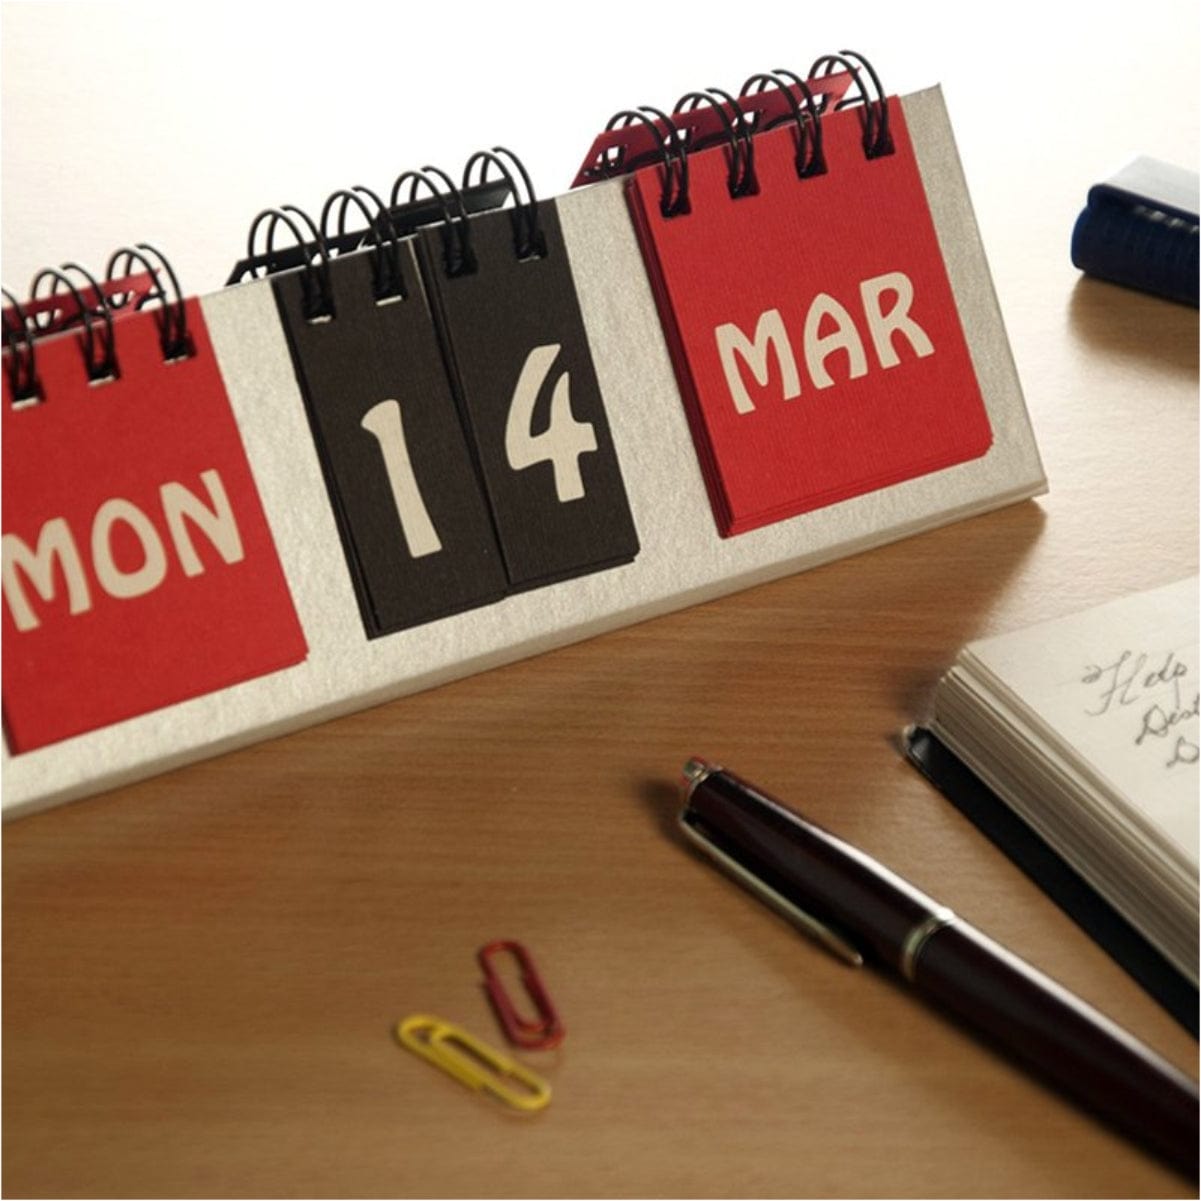 Perpetual Calendars